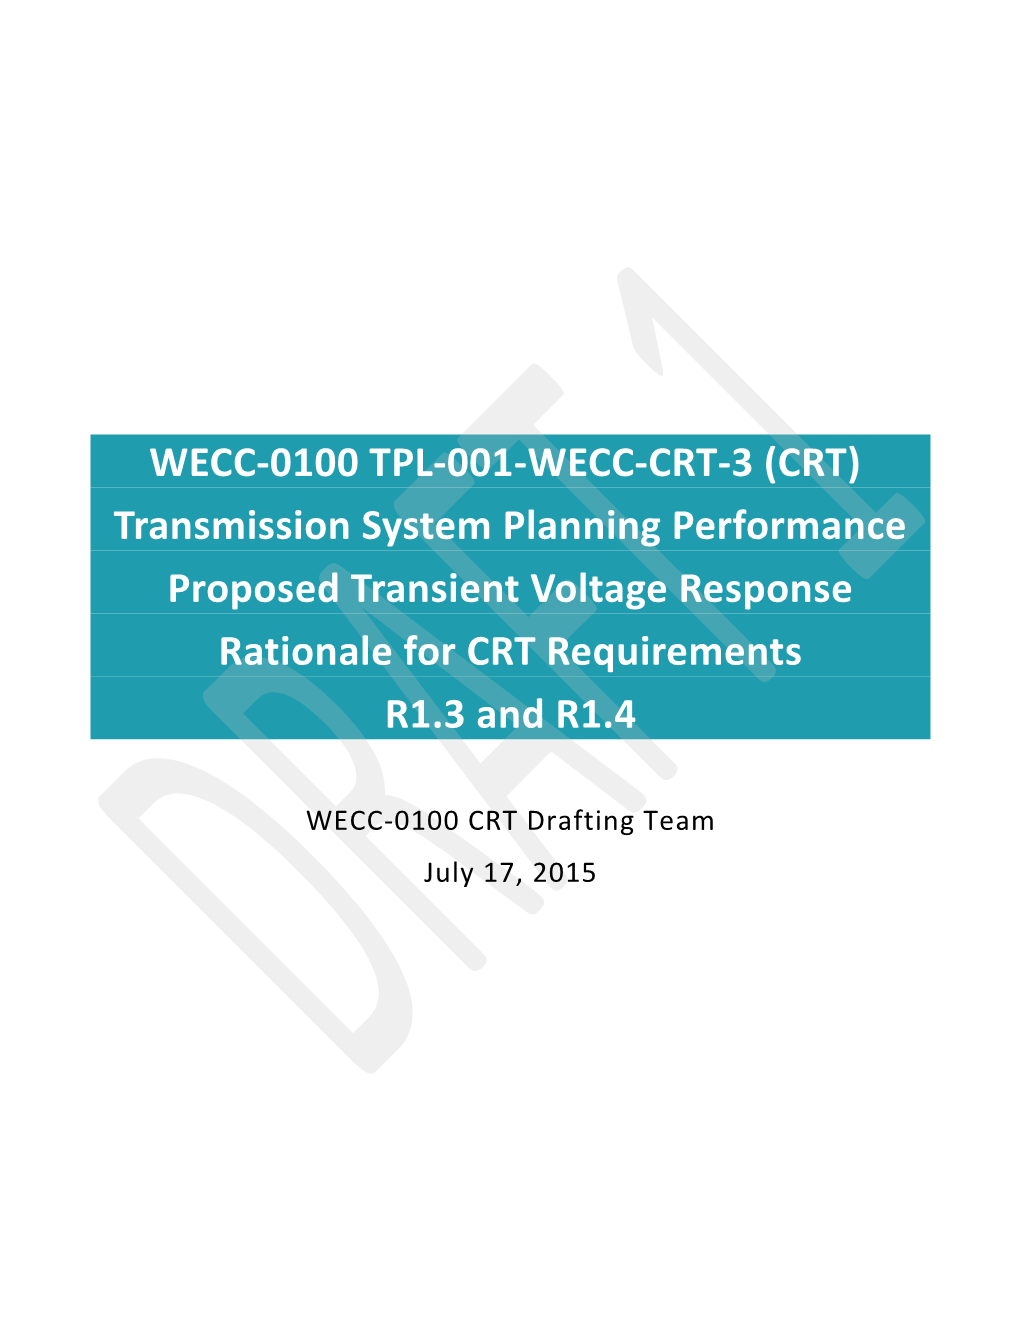 WECC-0100 TPL-001-WECC-2 White Paper - Matthews - 7-16-2015